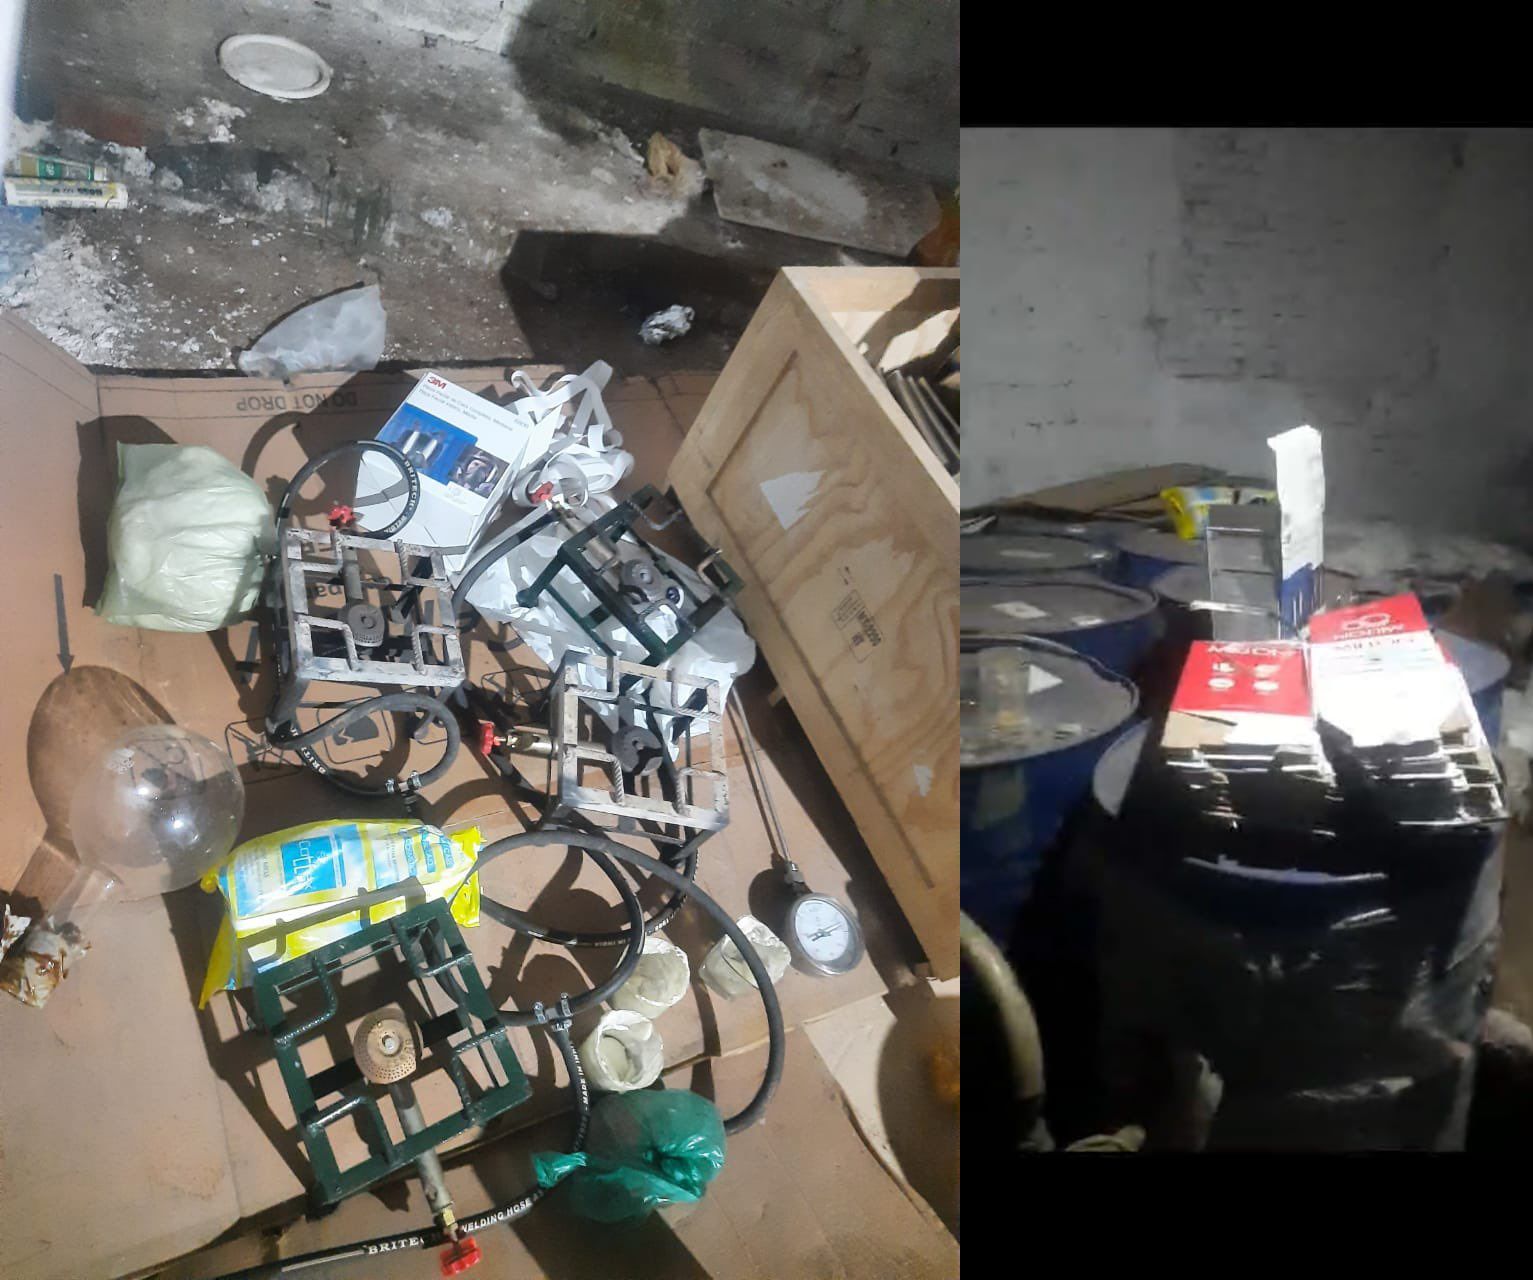 Part of what authorities found (Photo: X/@narcoticsbureau)